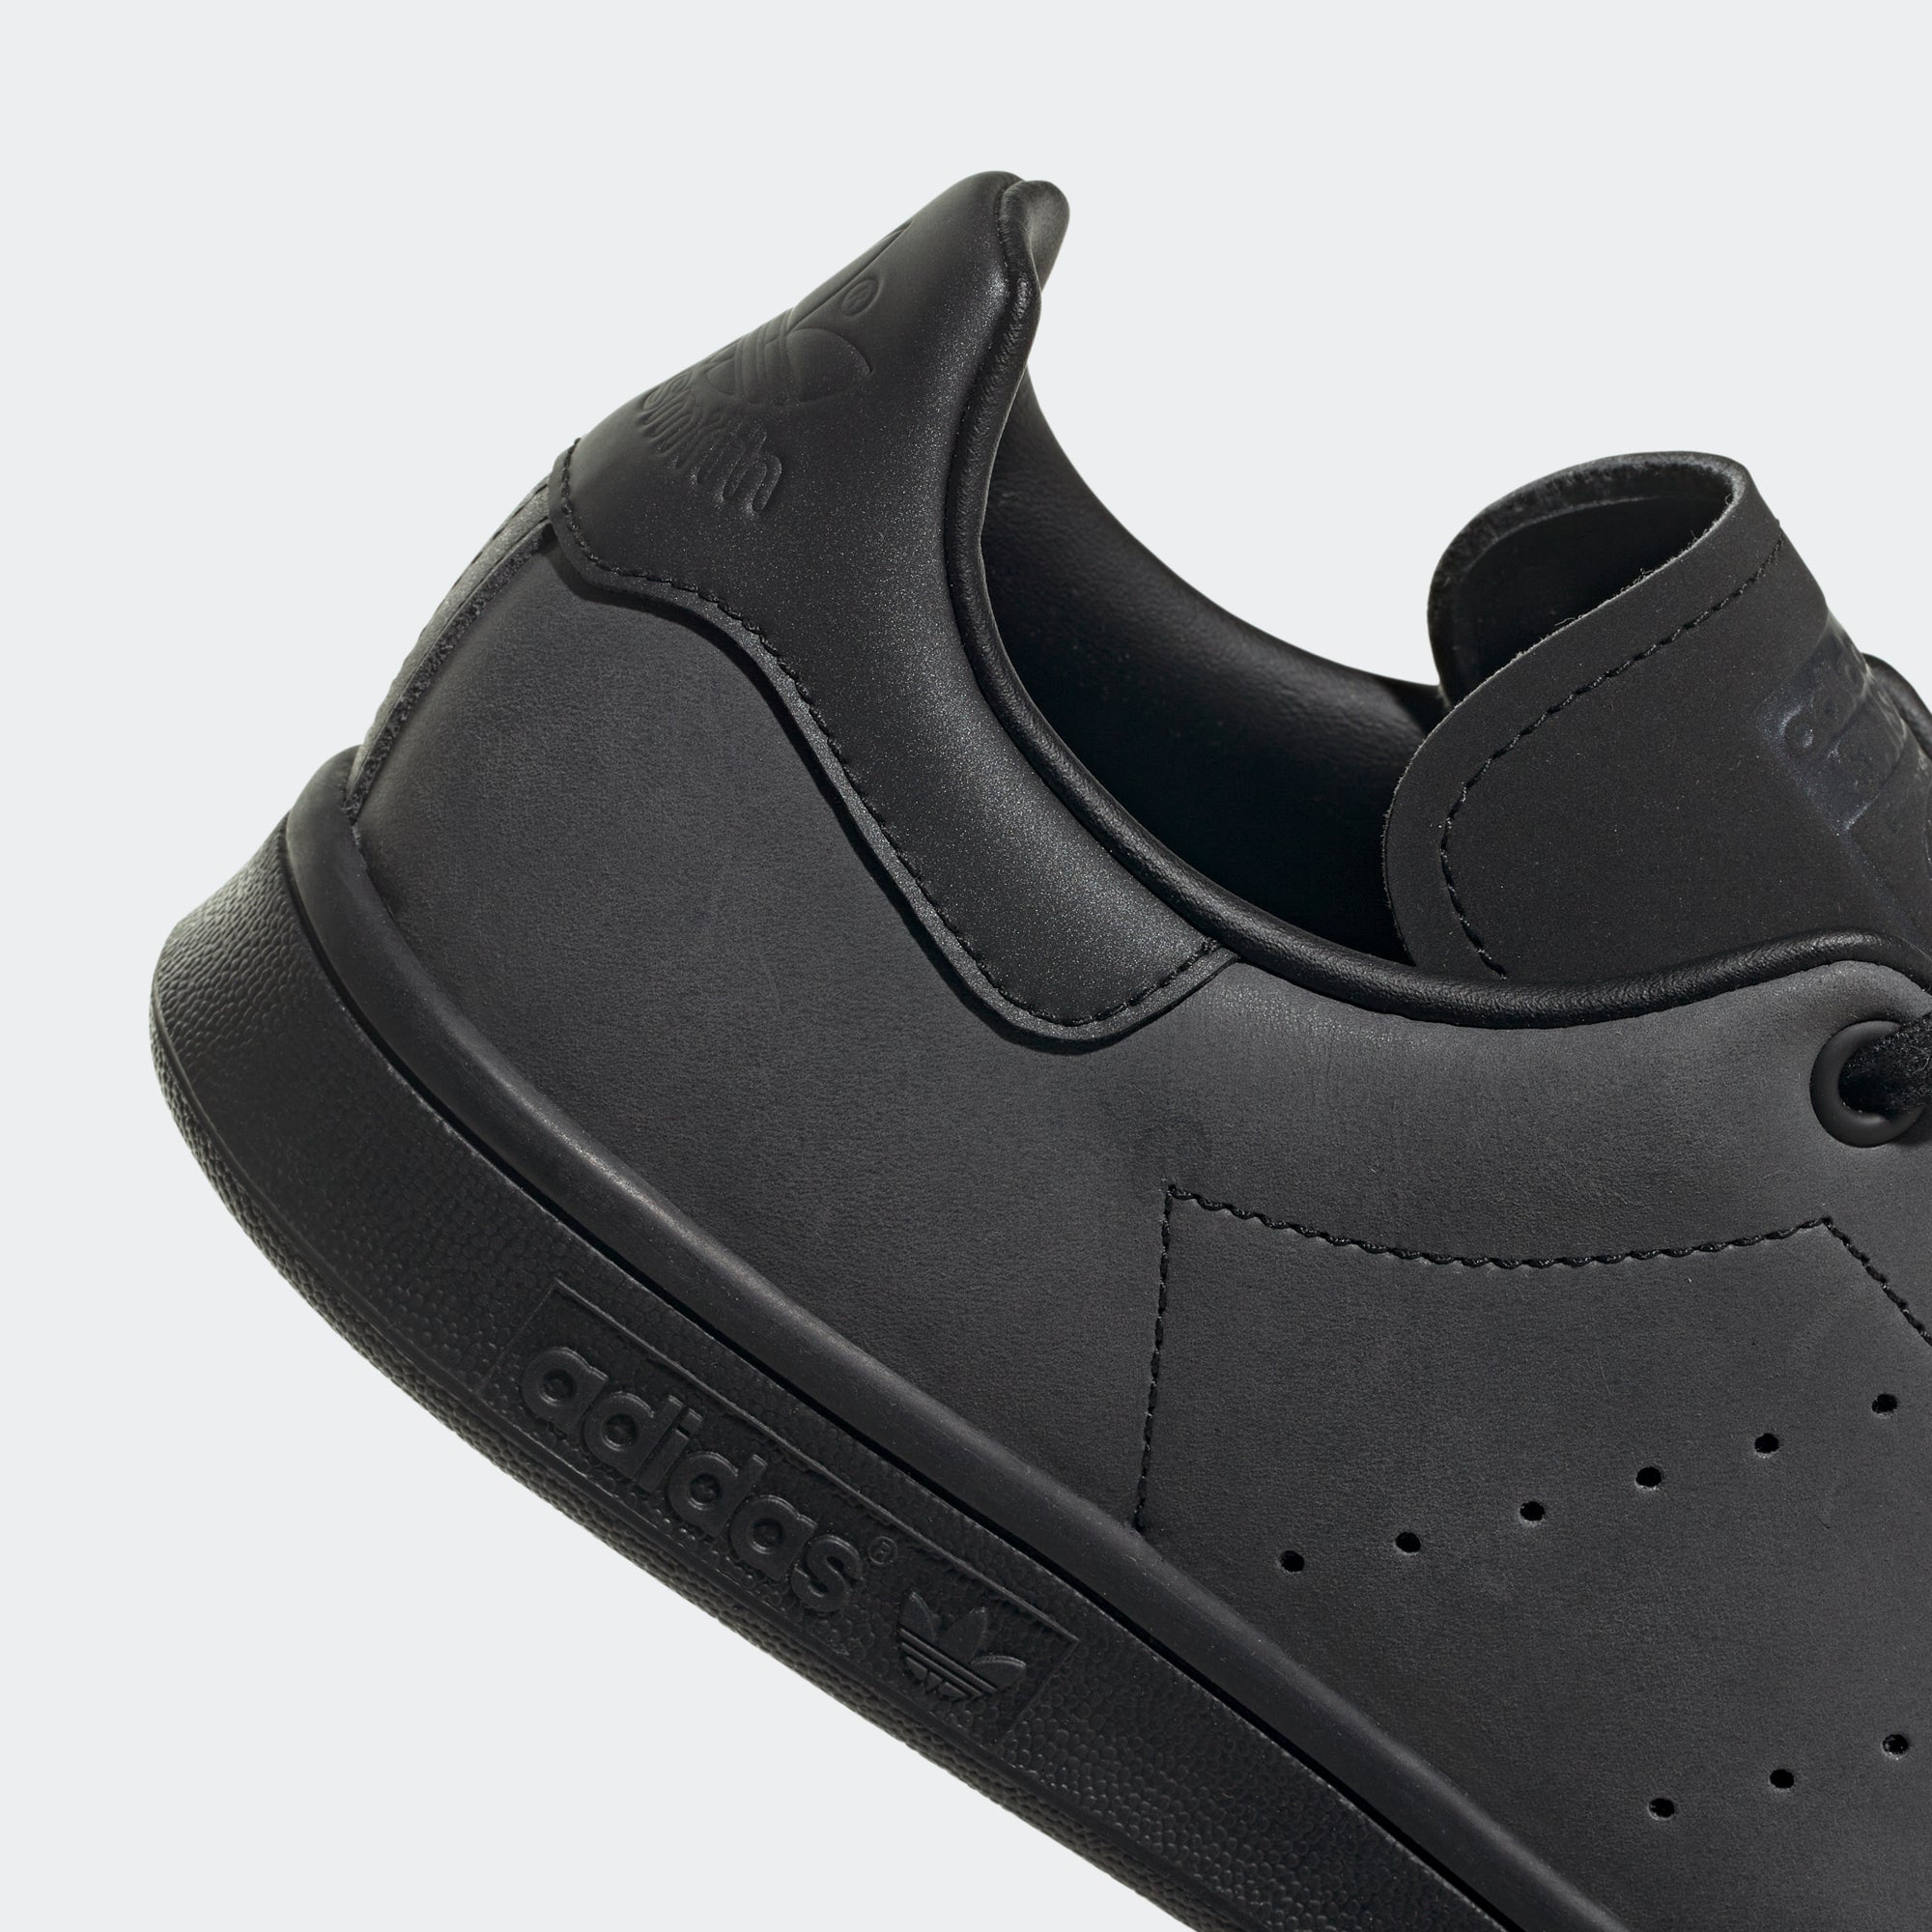 Adidas Stan Smith Black Carbon Blue Metallic shoes 